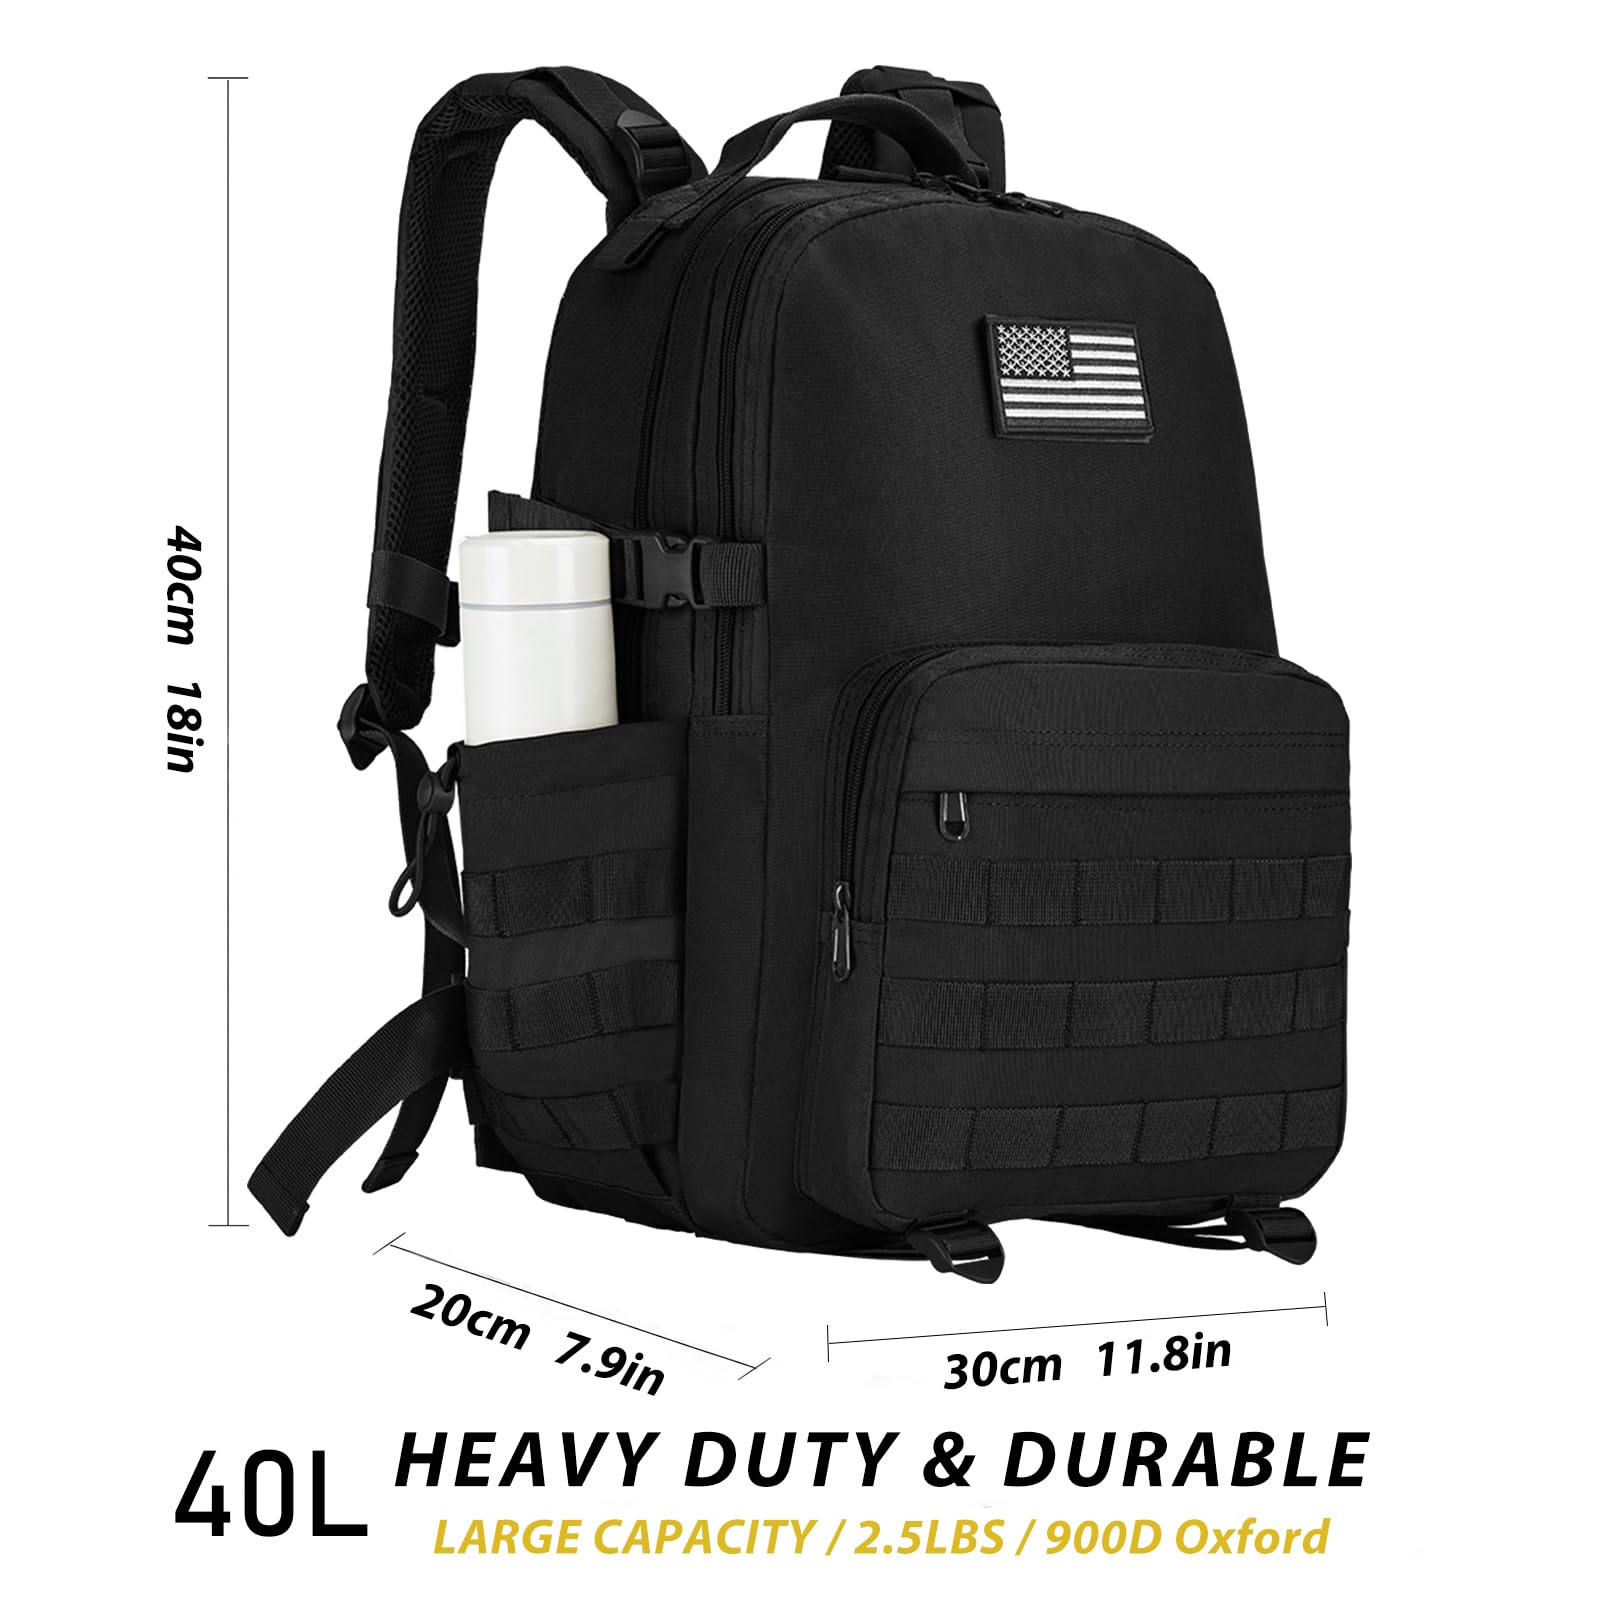 CVLIFE Tactical Backpack for Men Women 40L Molle Military Backpacks